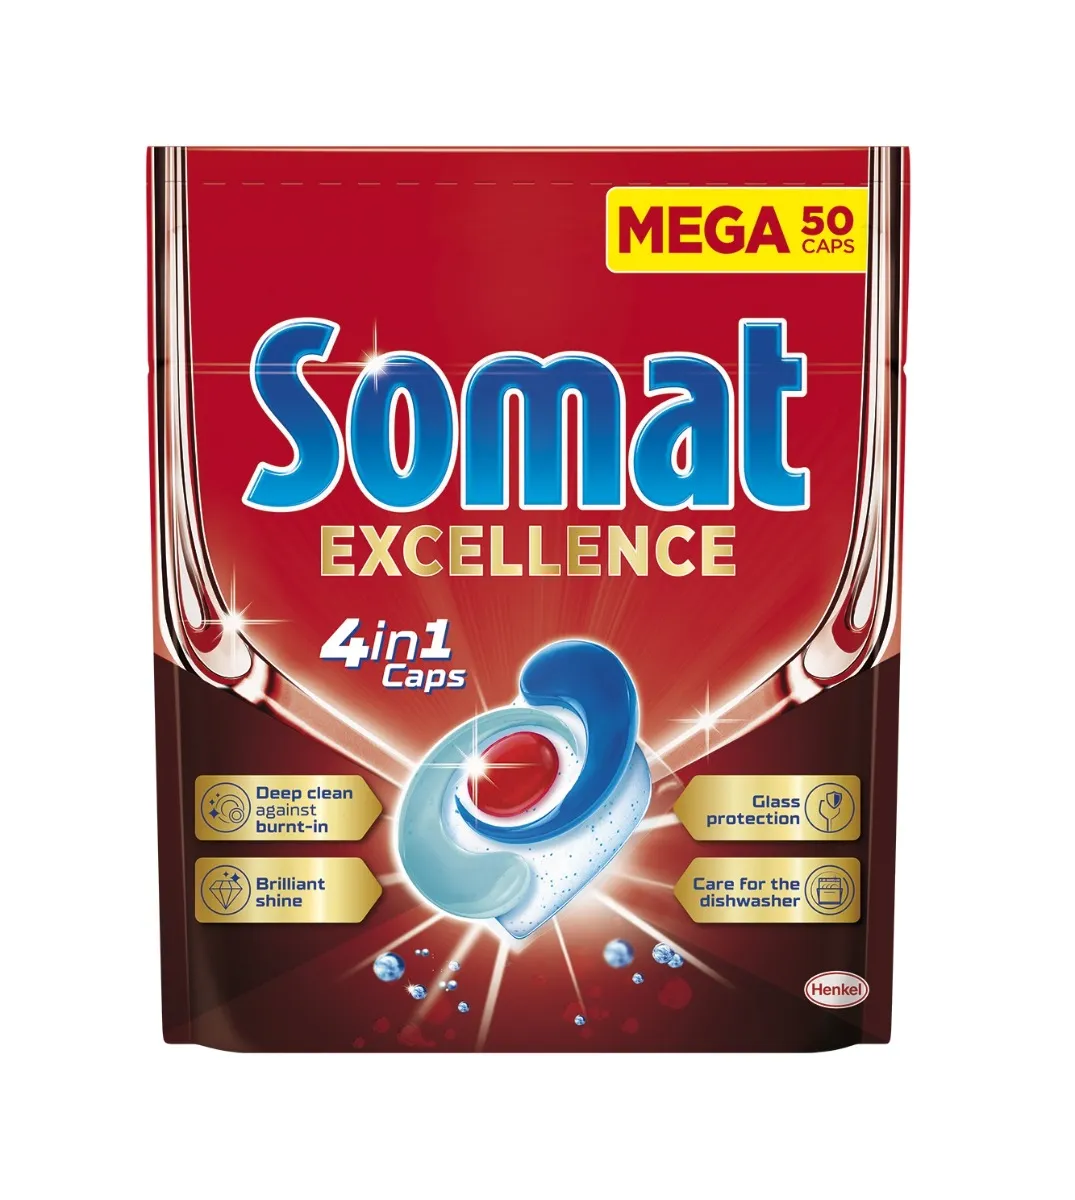 Somat Kapsle do myčky Excellence 4v1 50 ks